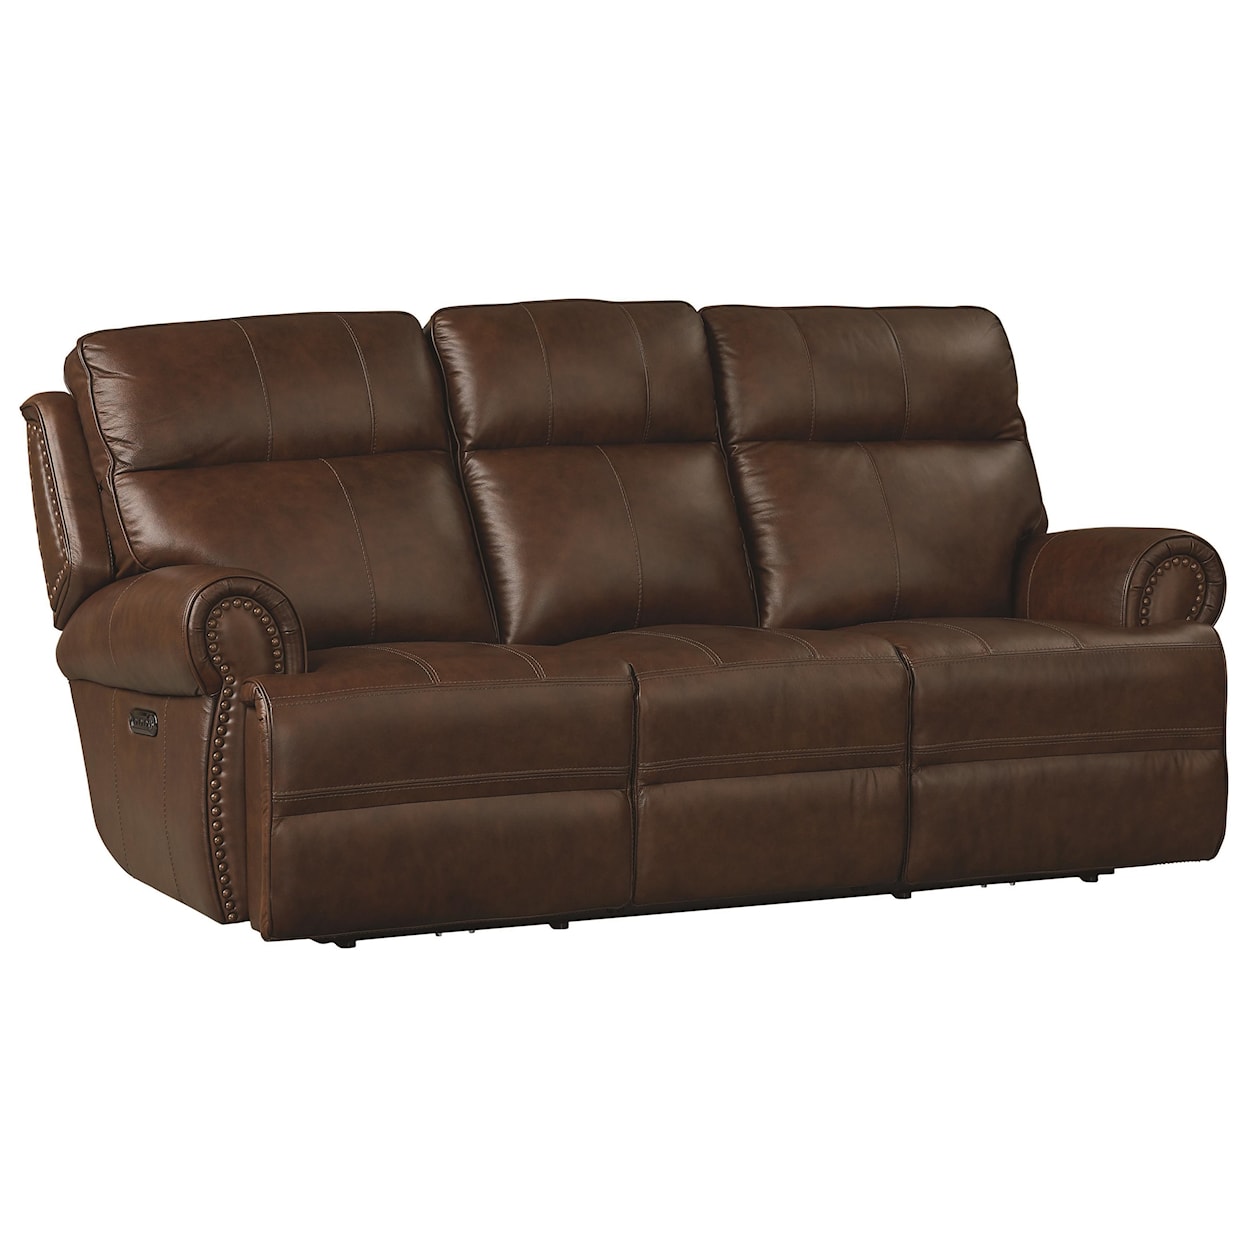 Bassett Club Level Claremont Power Leather ZG Reclining Sofa